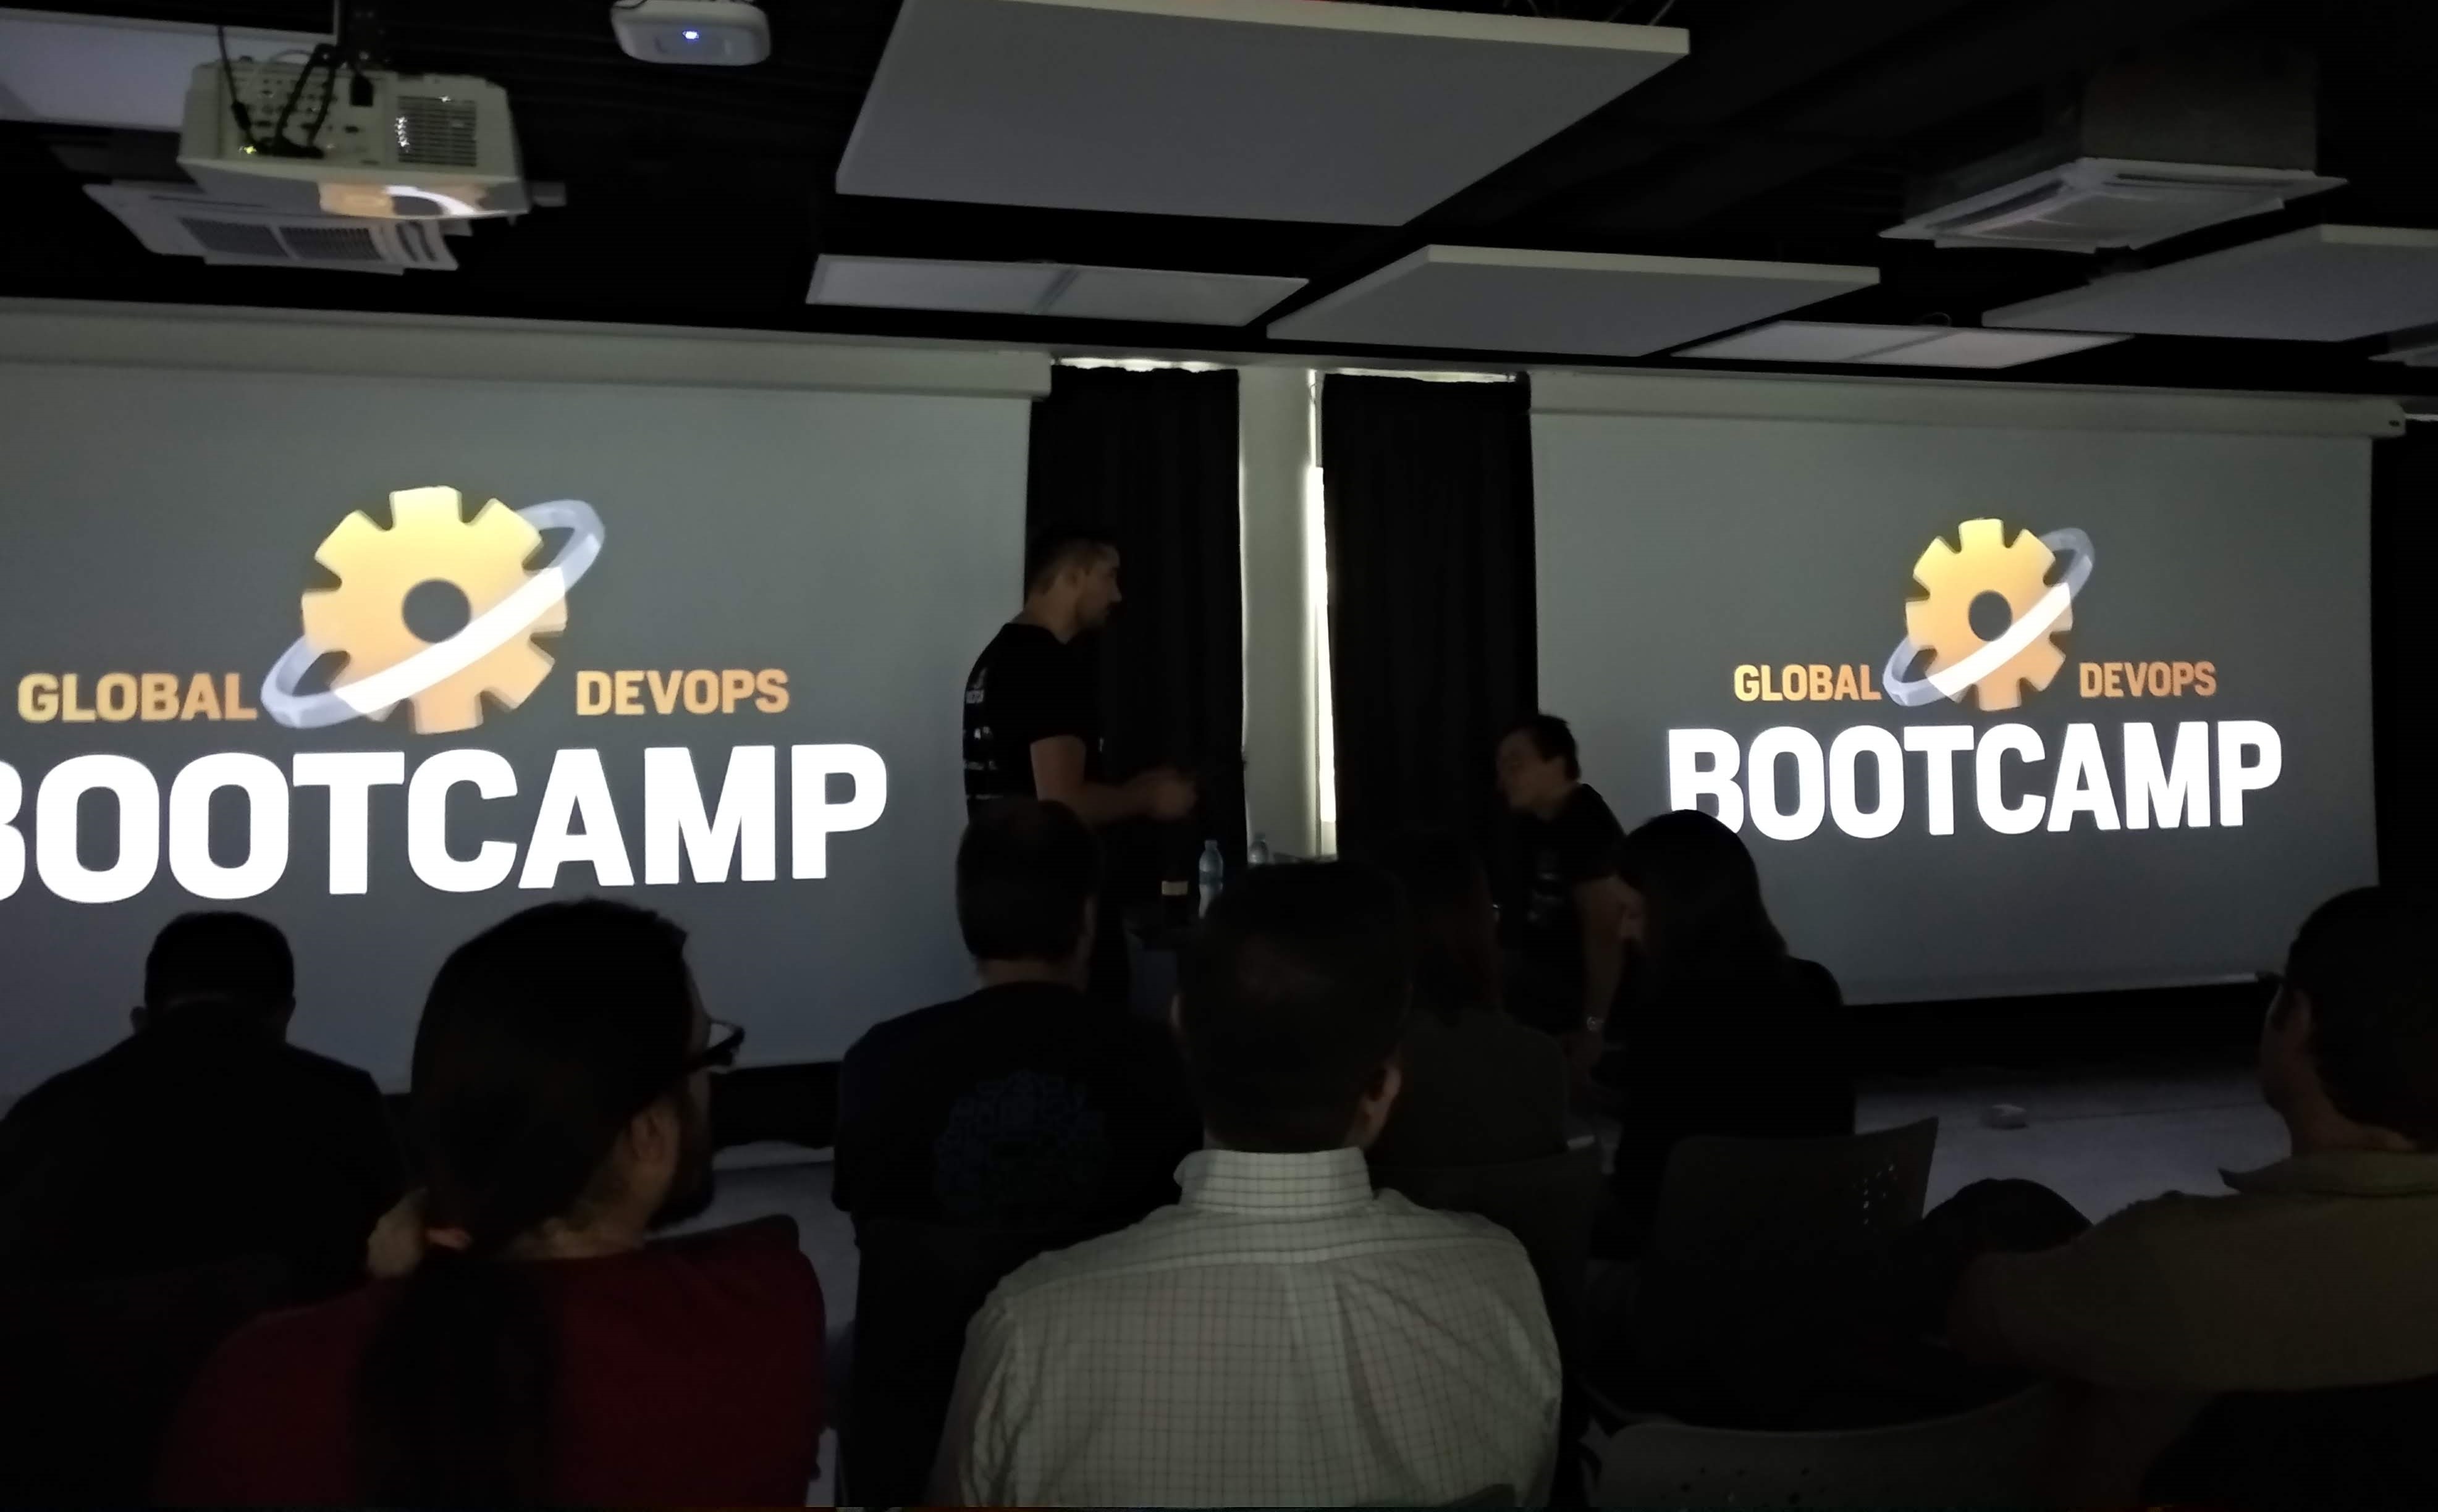 Grupo ICA en el Global DevOps Bootcamp de Microsoft en Barcelona